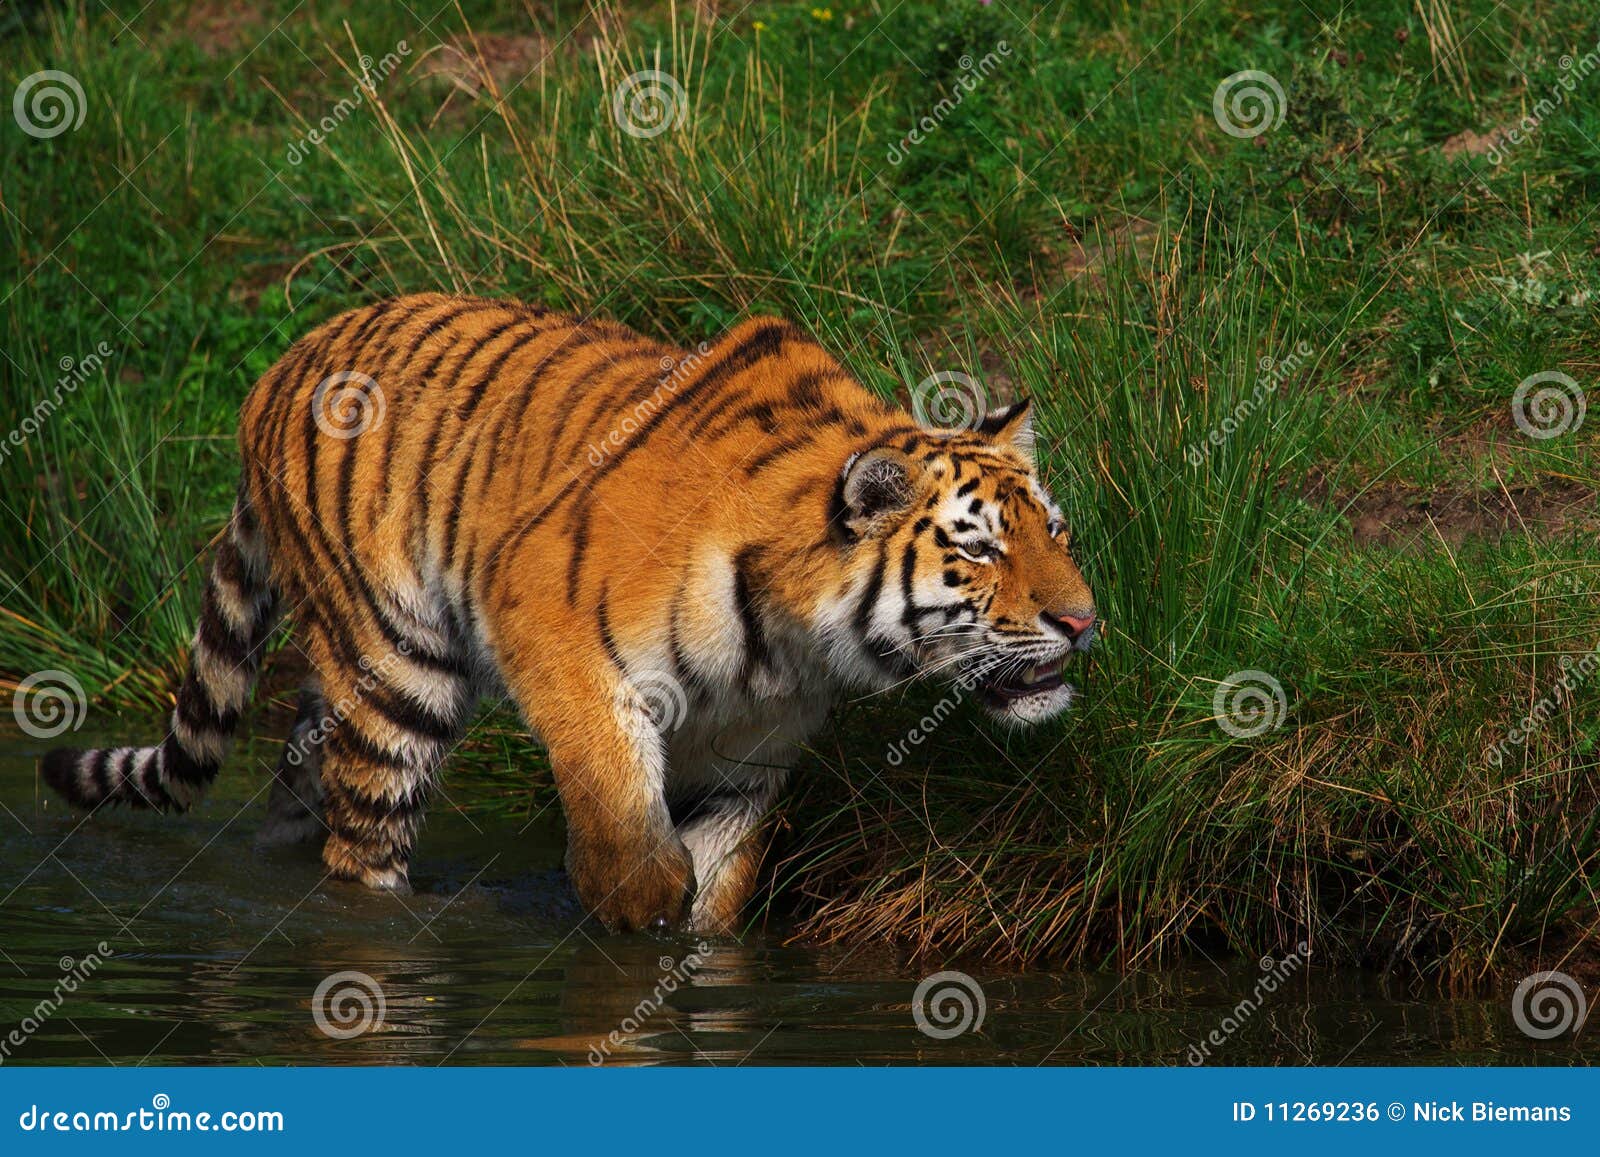 creeping siberian tiger